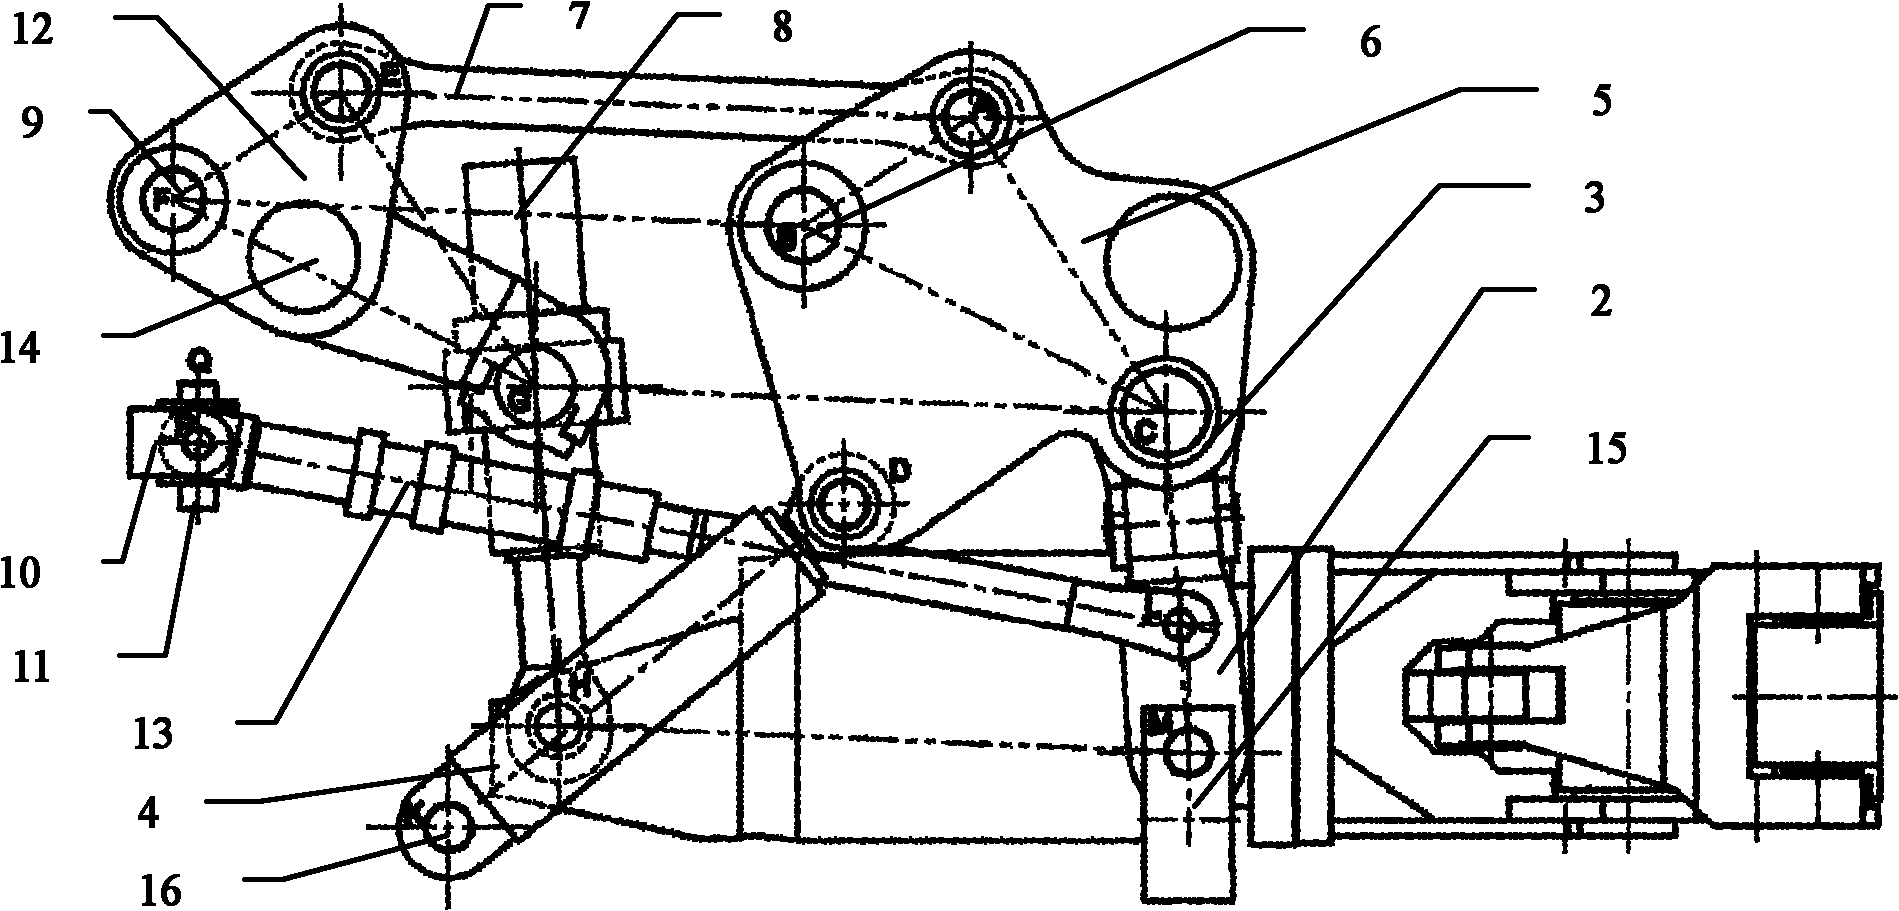 Claw beam lifting mechanism for forging manipulator